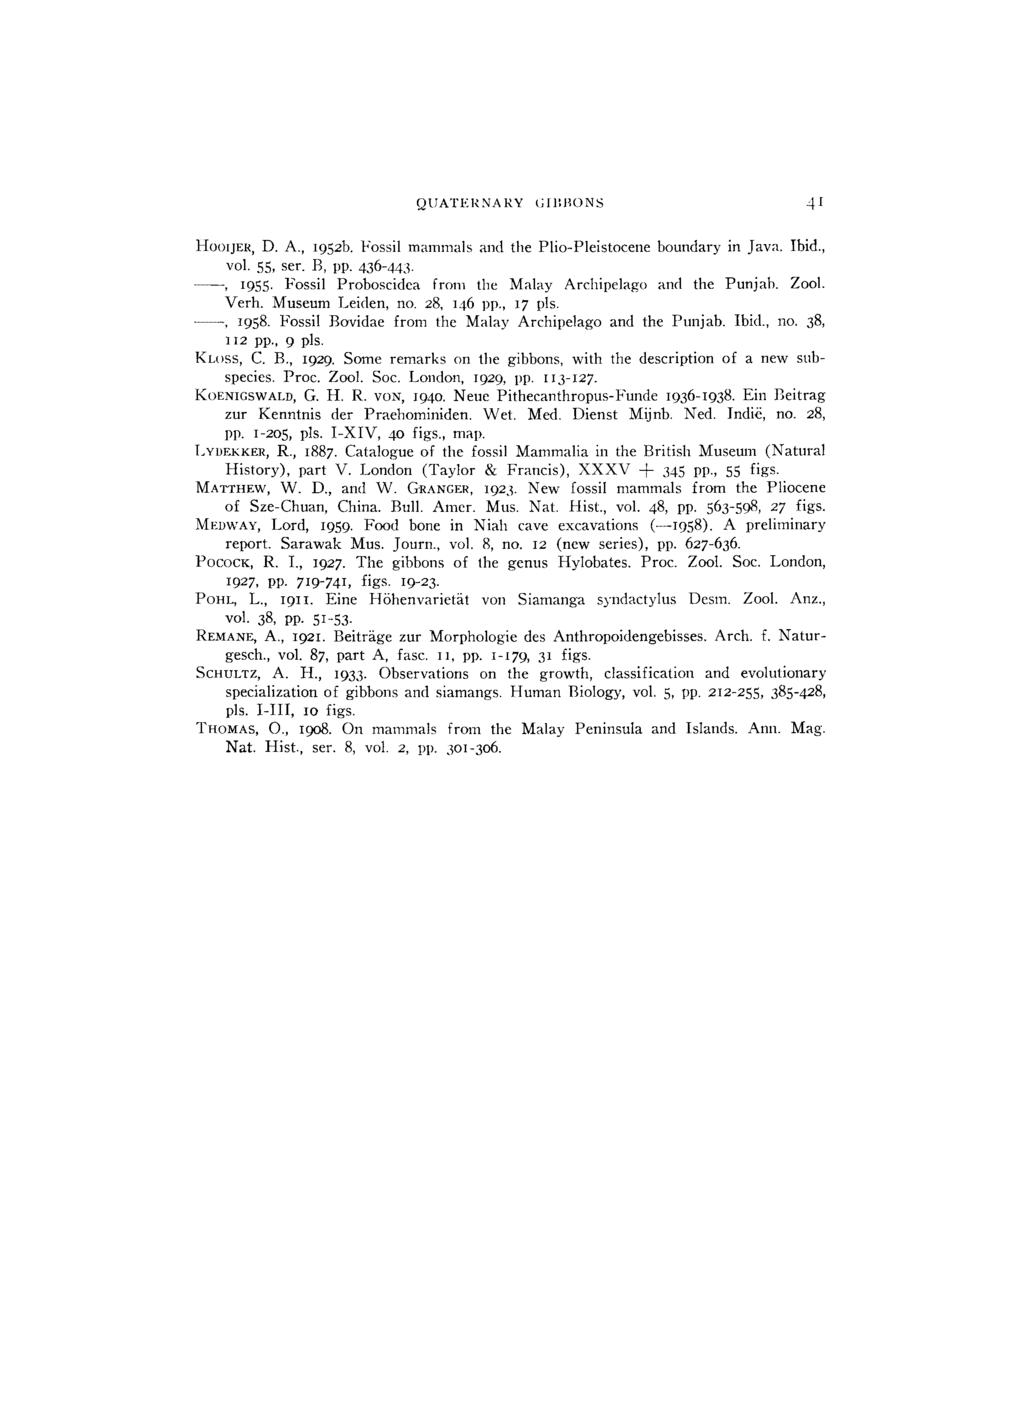 QUATERNARY GUIDONS 41 HOOIJER, D. A., 1952b. Fossil mammals and the Plio-Pleistocene boundary in Java. Ibid., vol. 55, ser. B, pp. 436-443-, 1955.